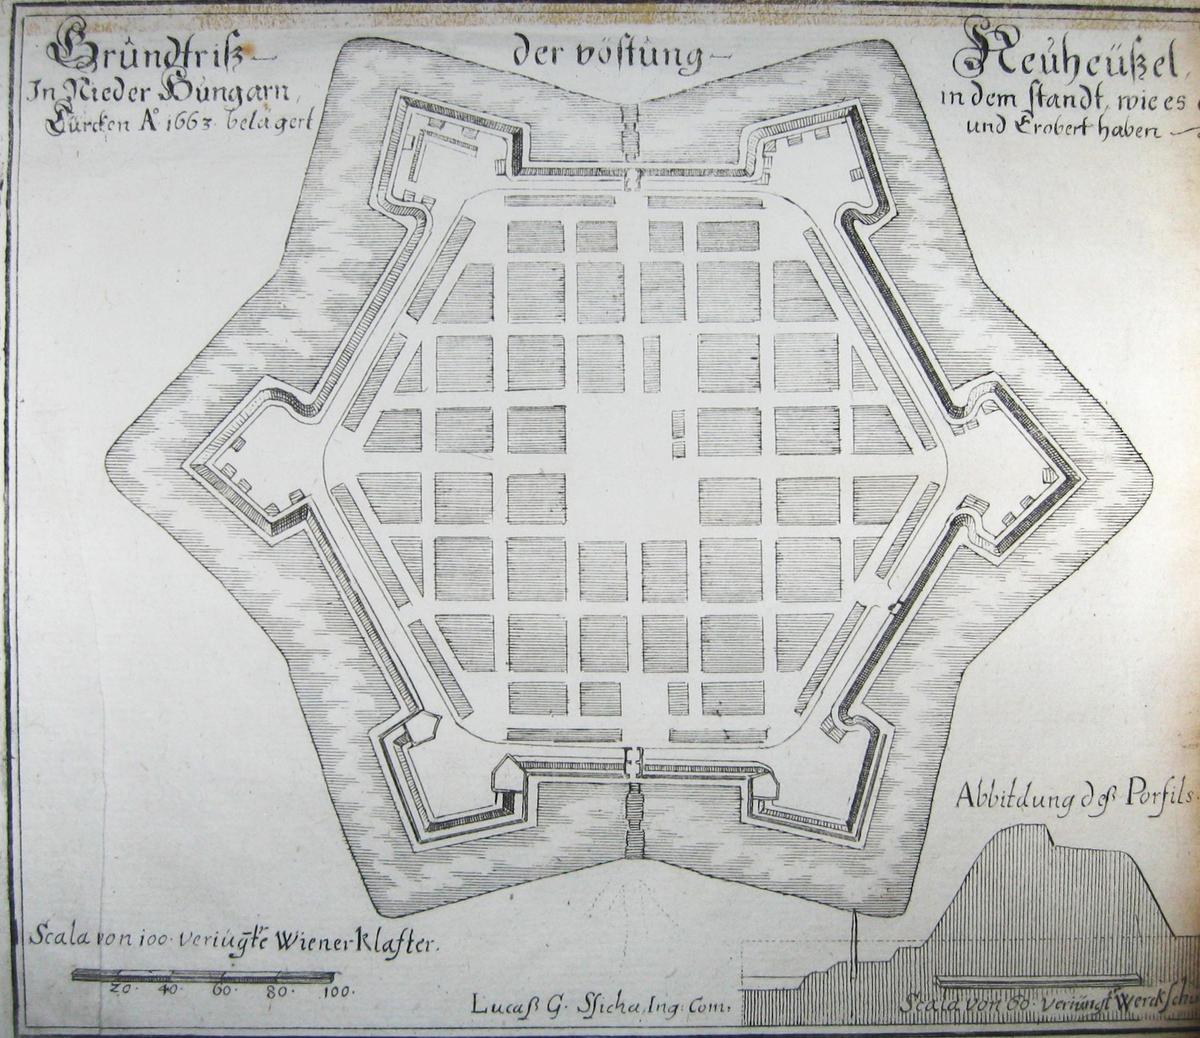 A plan of Nové Zámky in Slovakia, built in 1663. (<a href="https://commons.wikimedia.org/wiki/File:Neuh%C3%A4usel1680.jpg">Public Domain</a>)